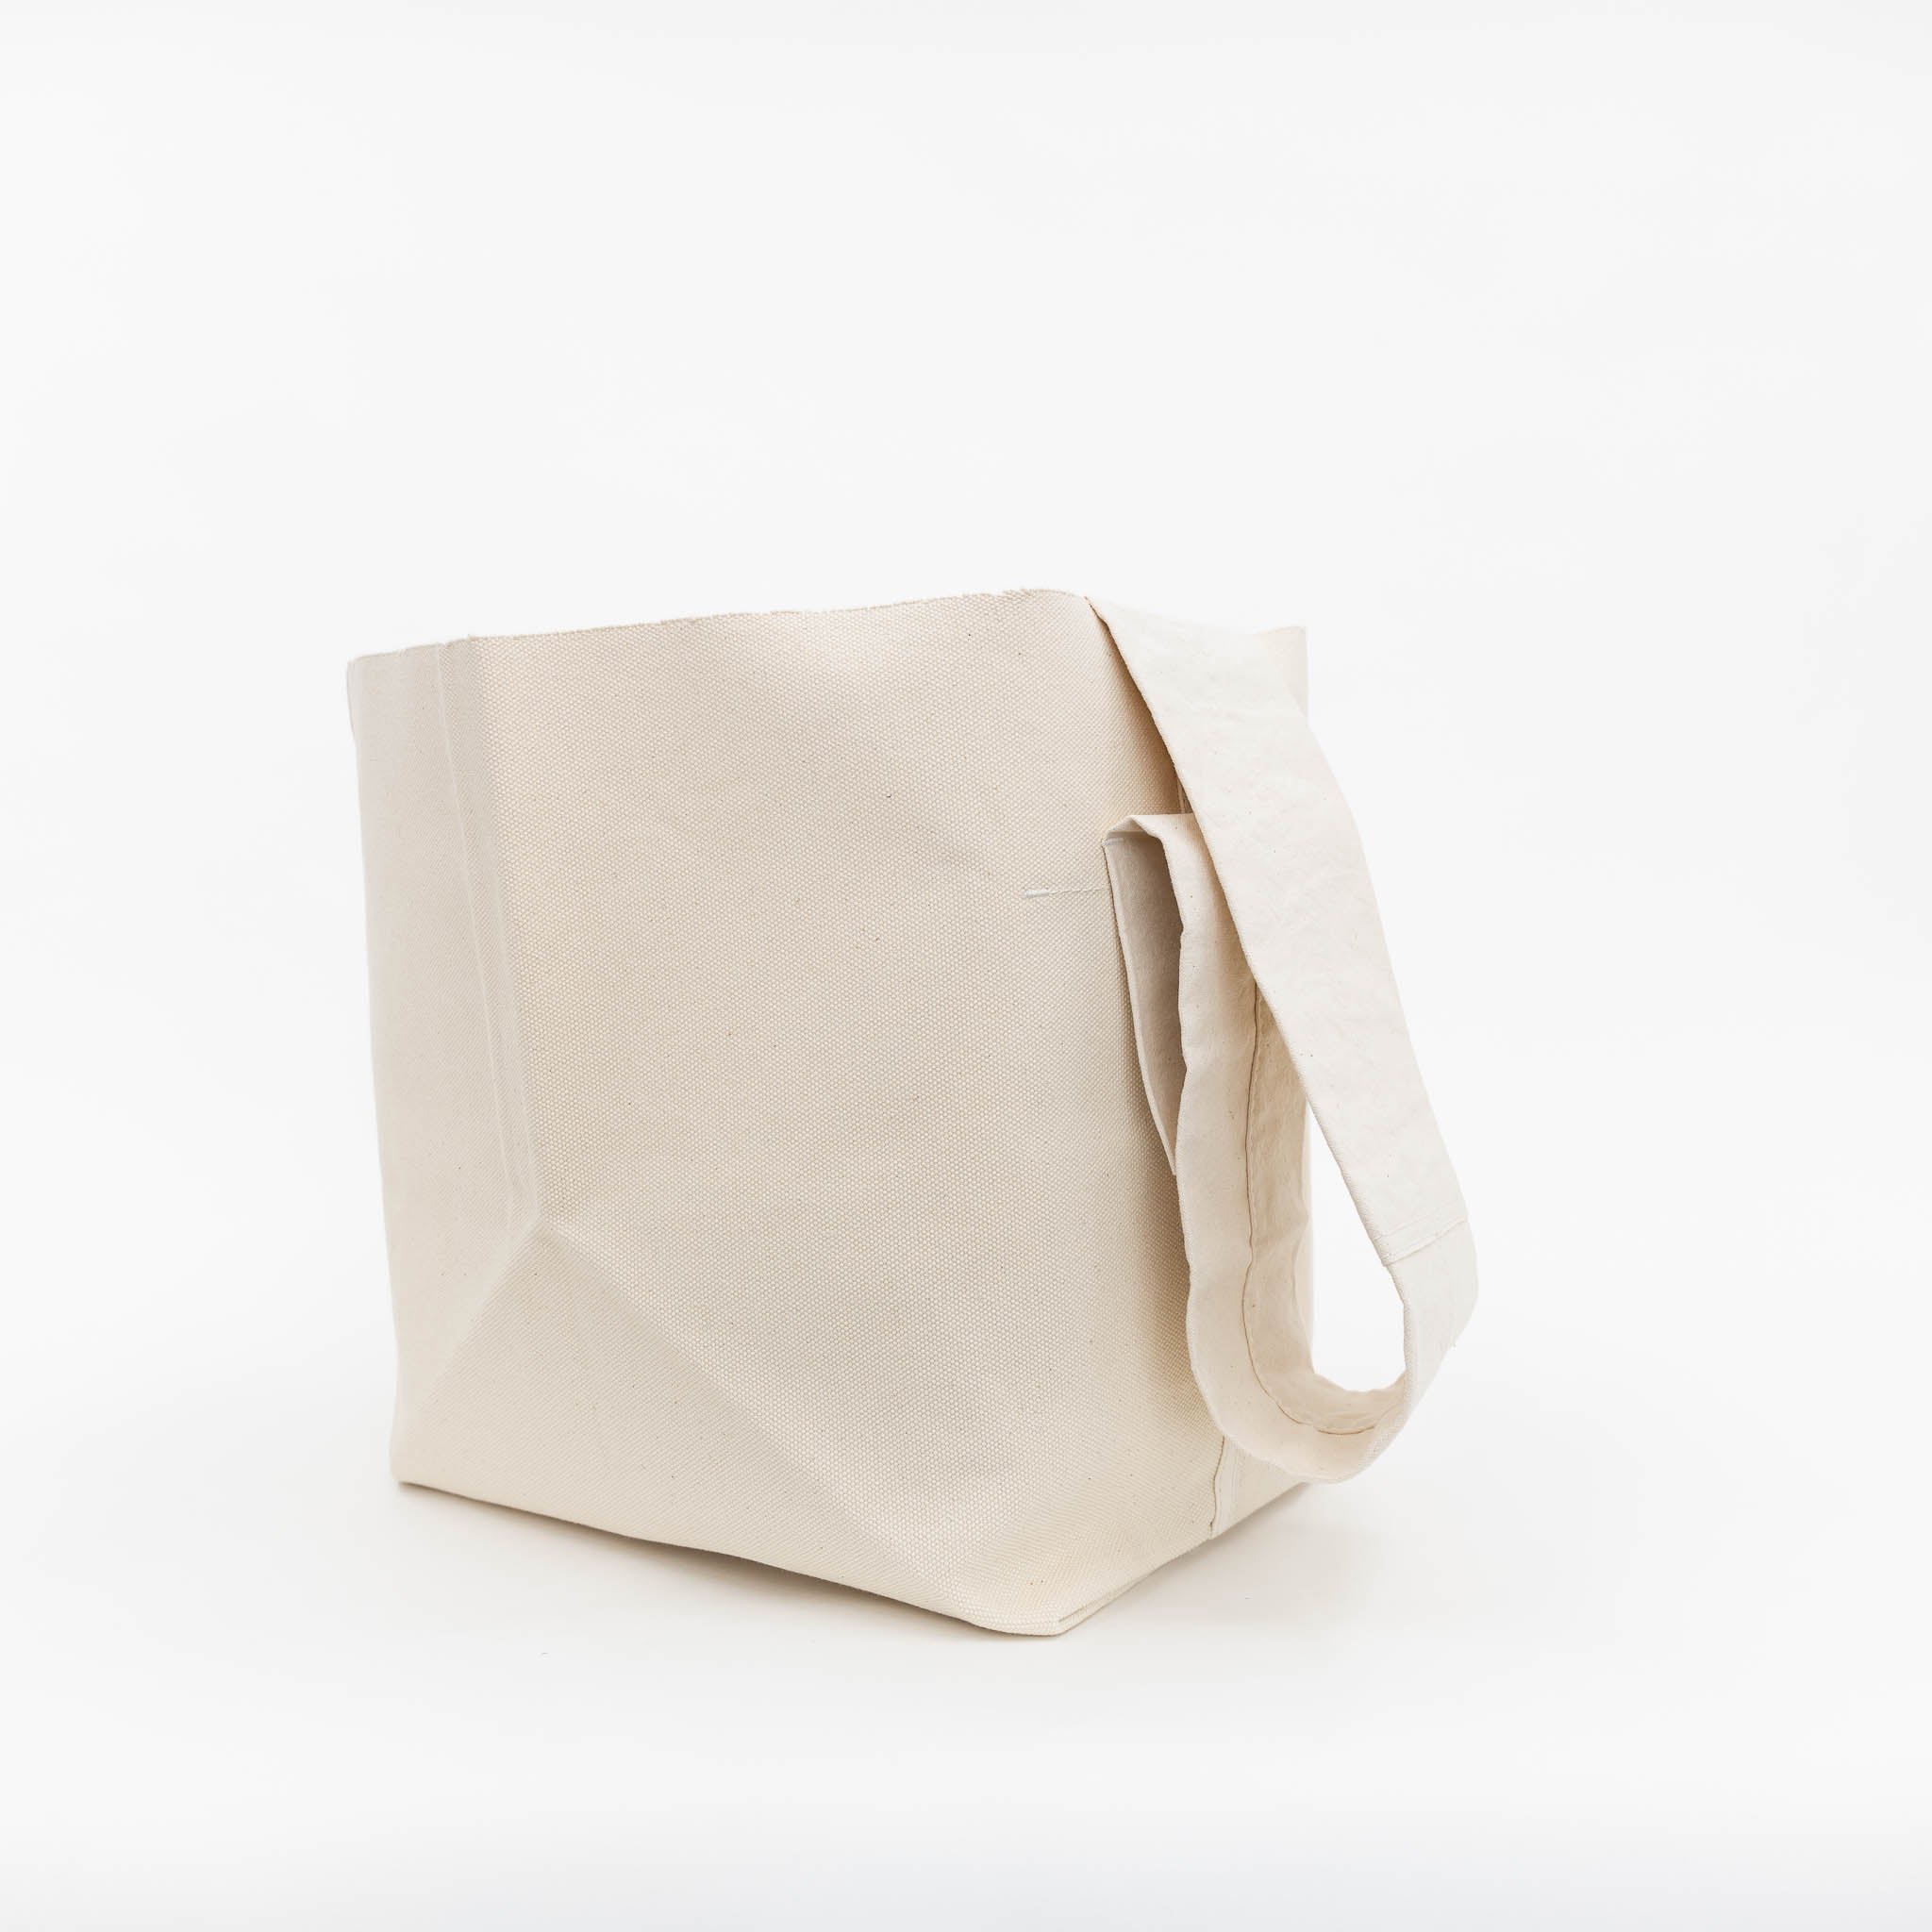 origami hand bag